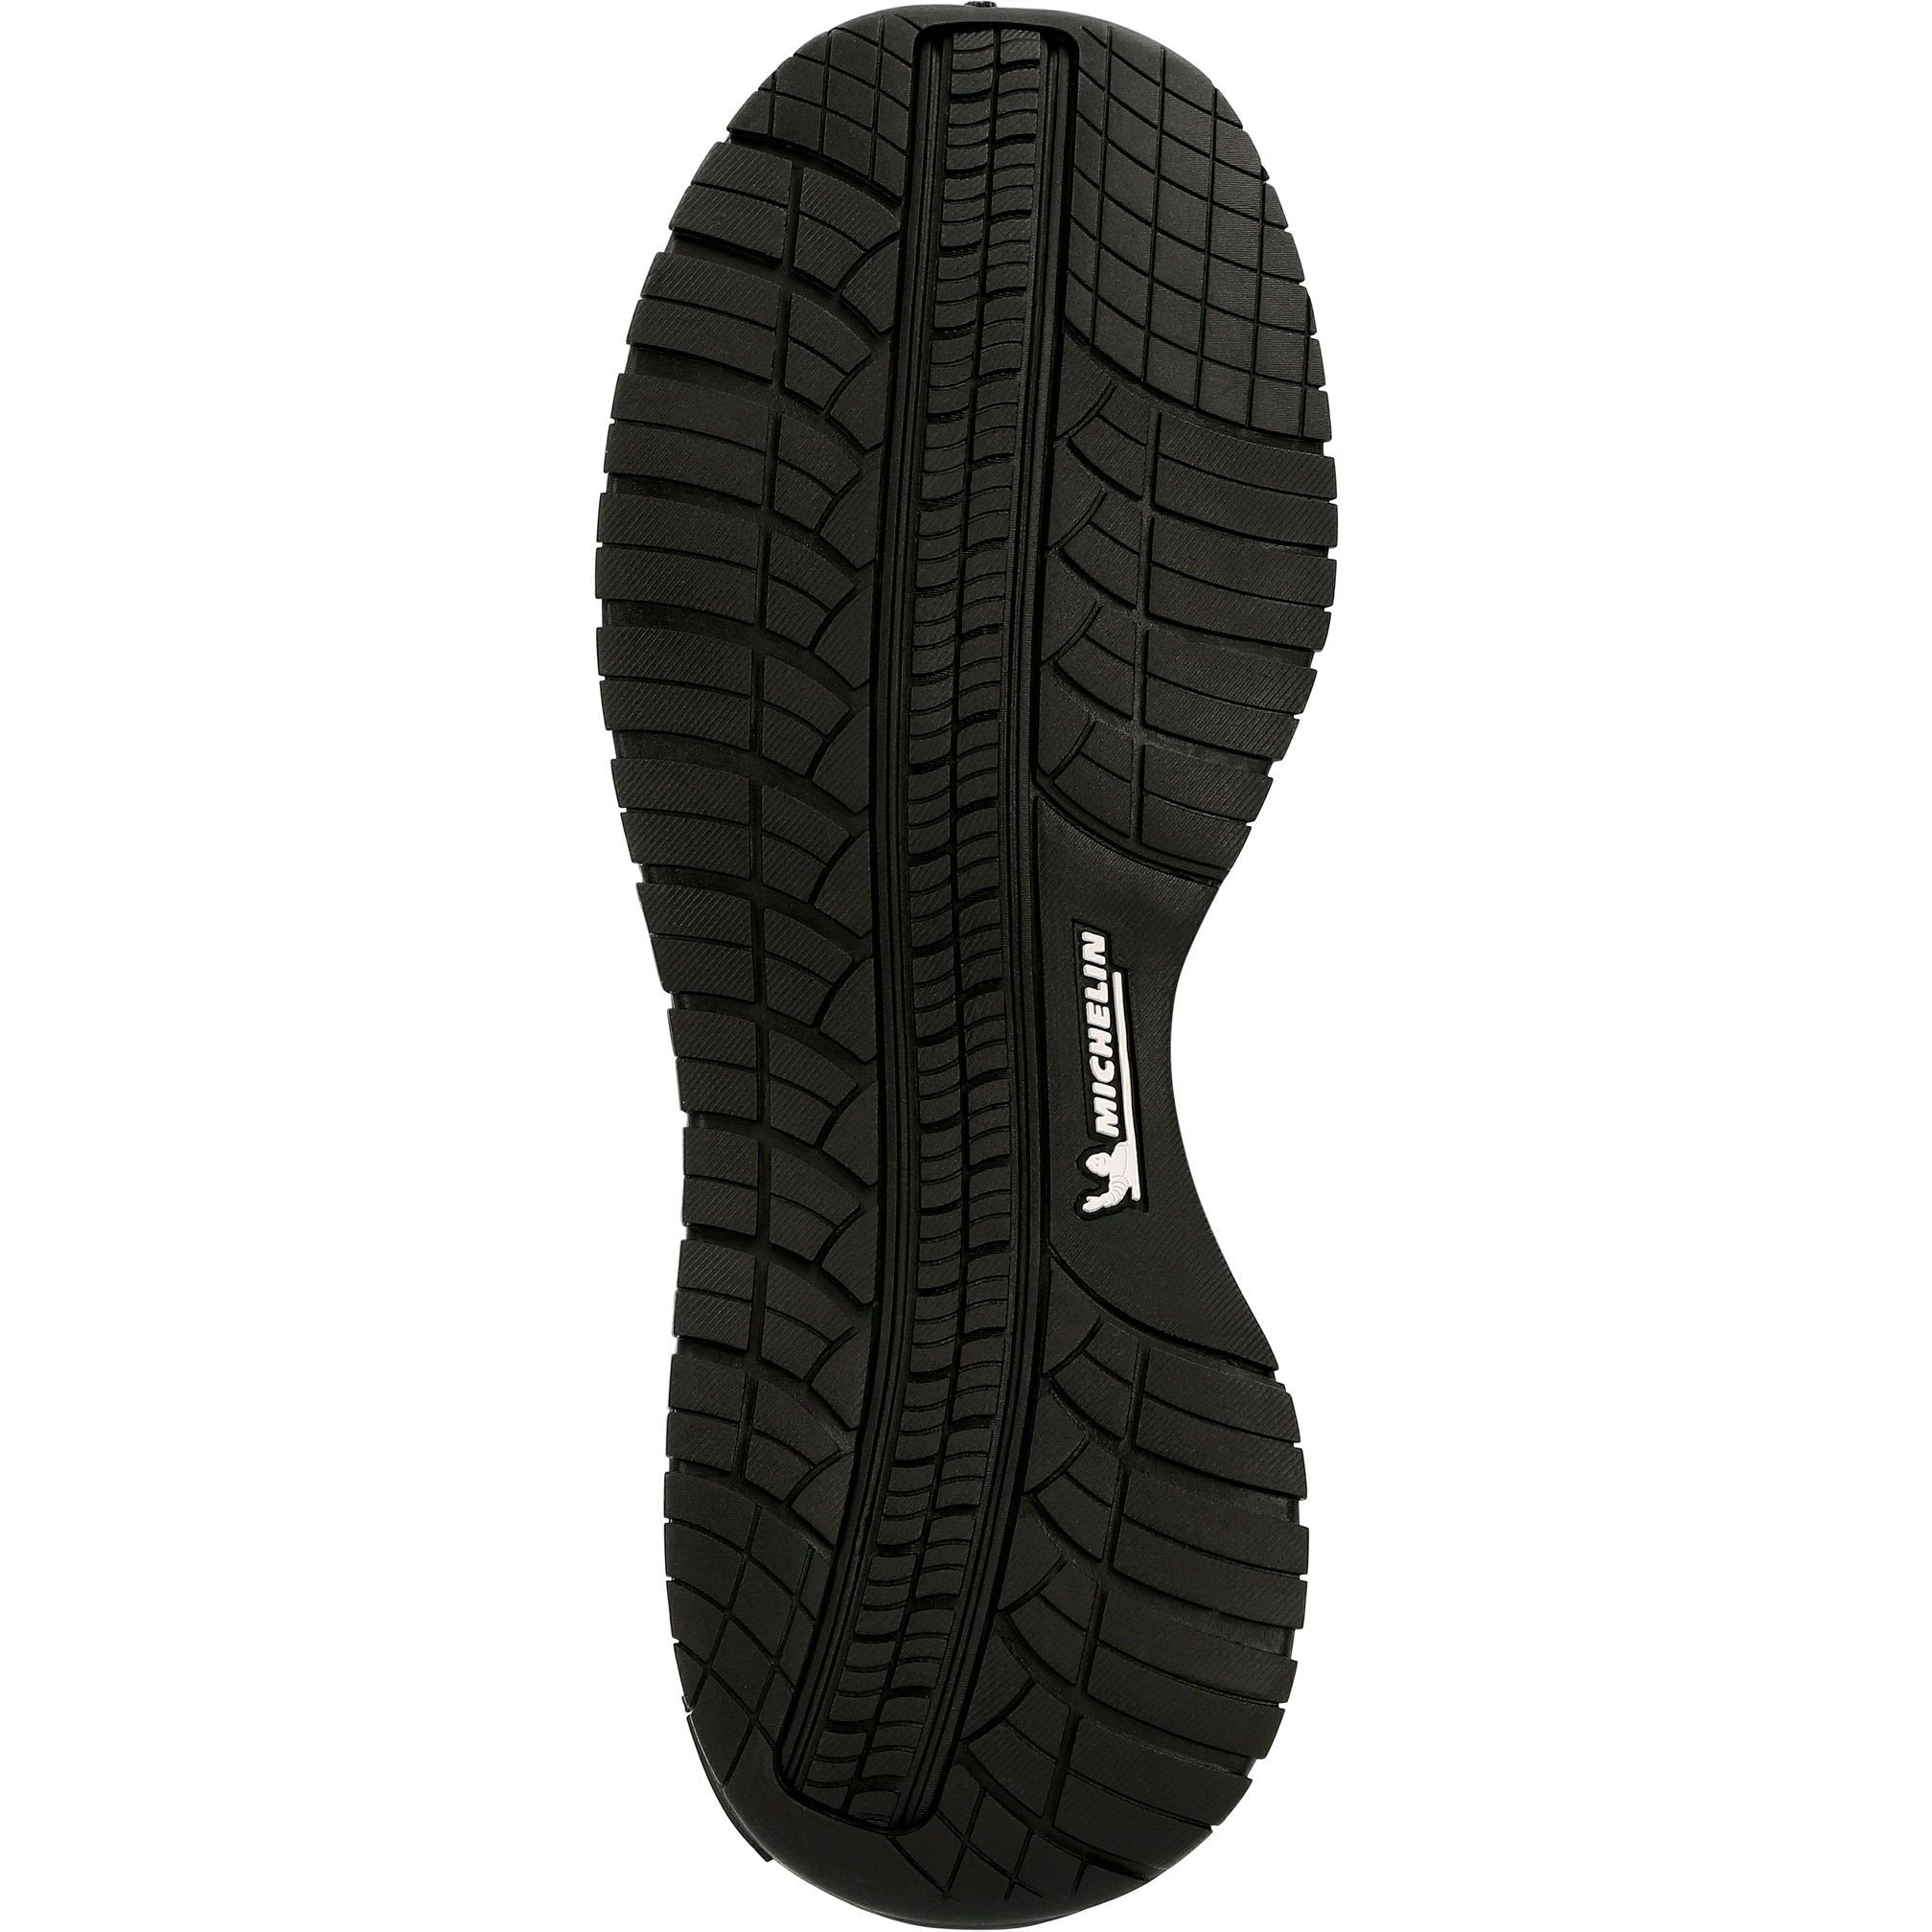 Michelin Men's Latitude Tour Alloy Toe WP Athletic Work Shoe - MIC0002  - Overlook Boots